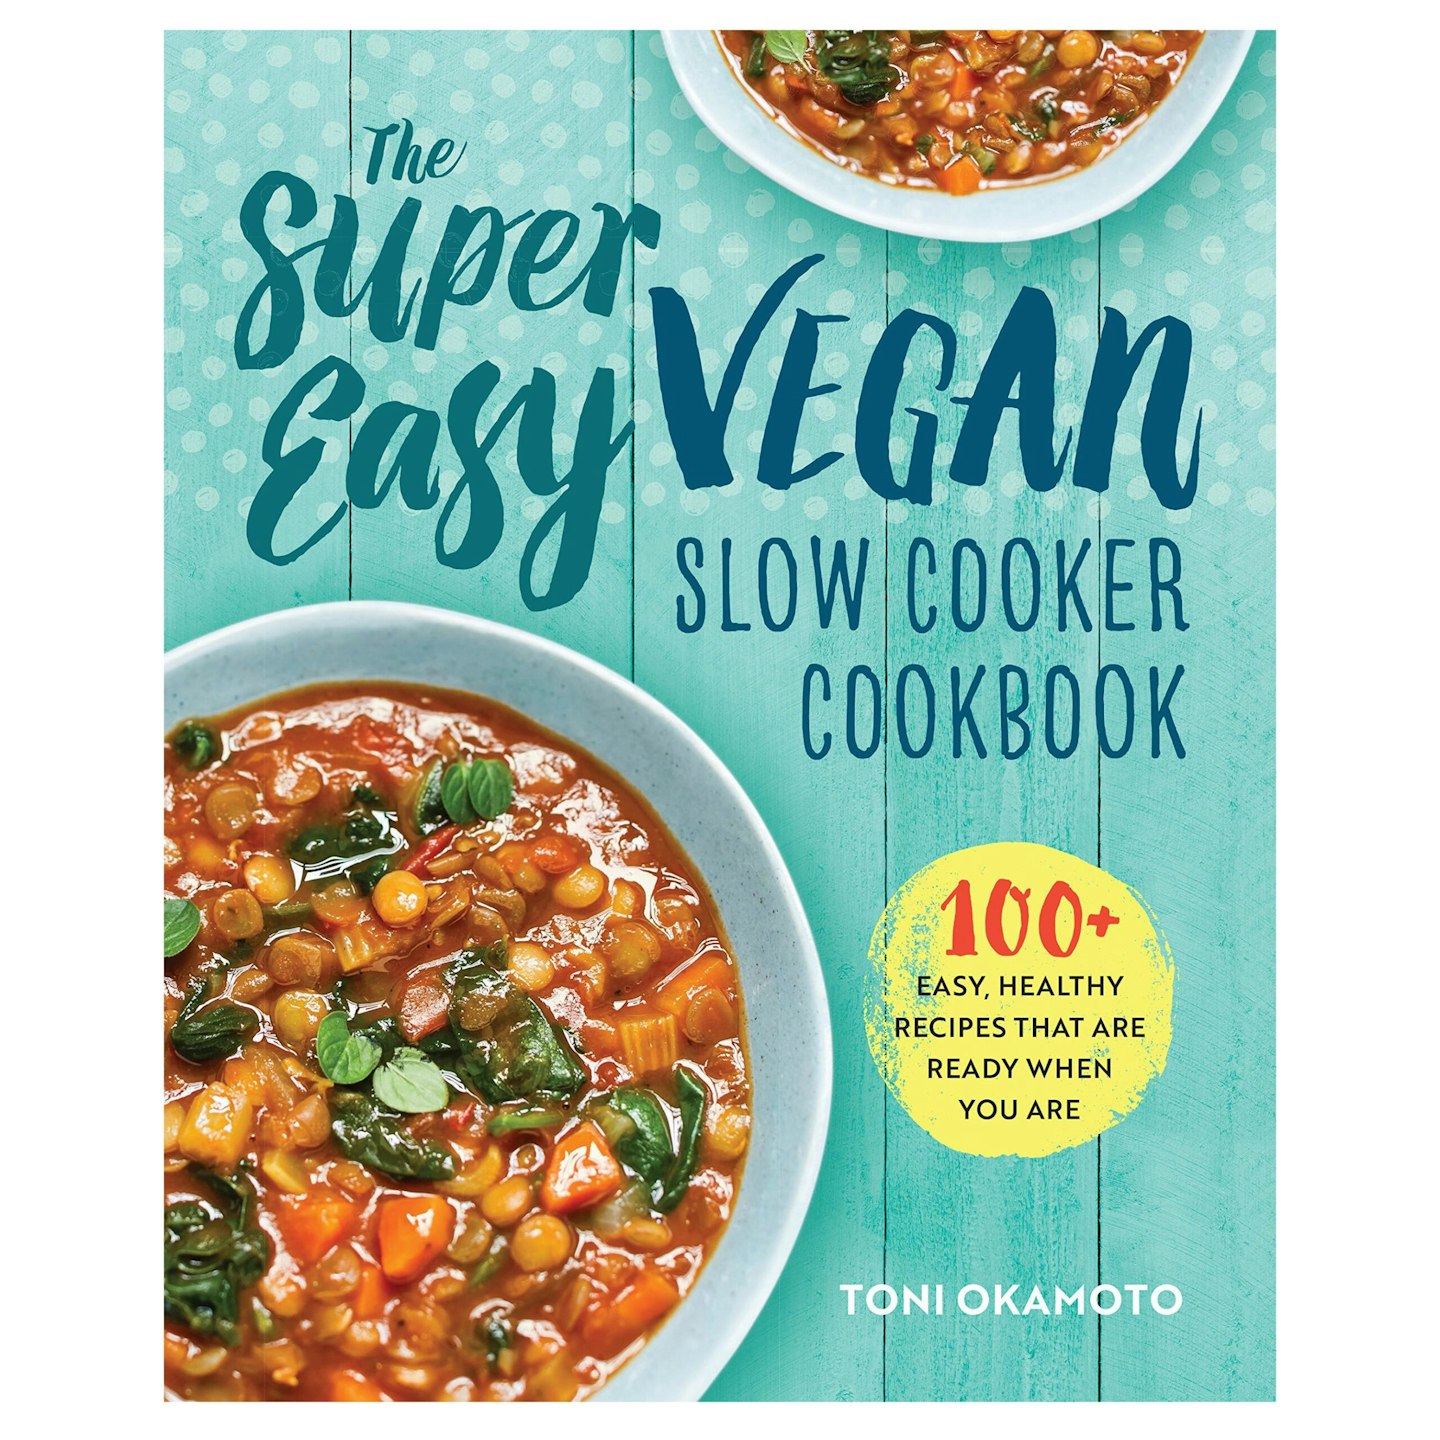 The Super Easy Vegan Slow Cooker Cookbook